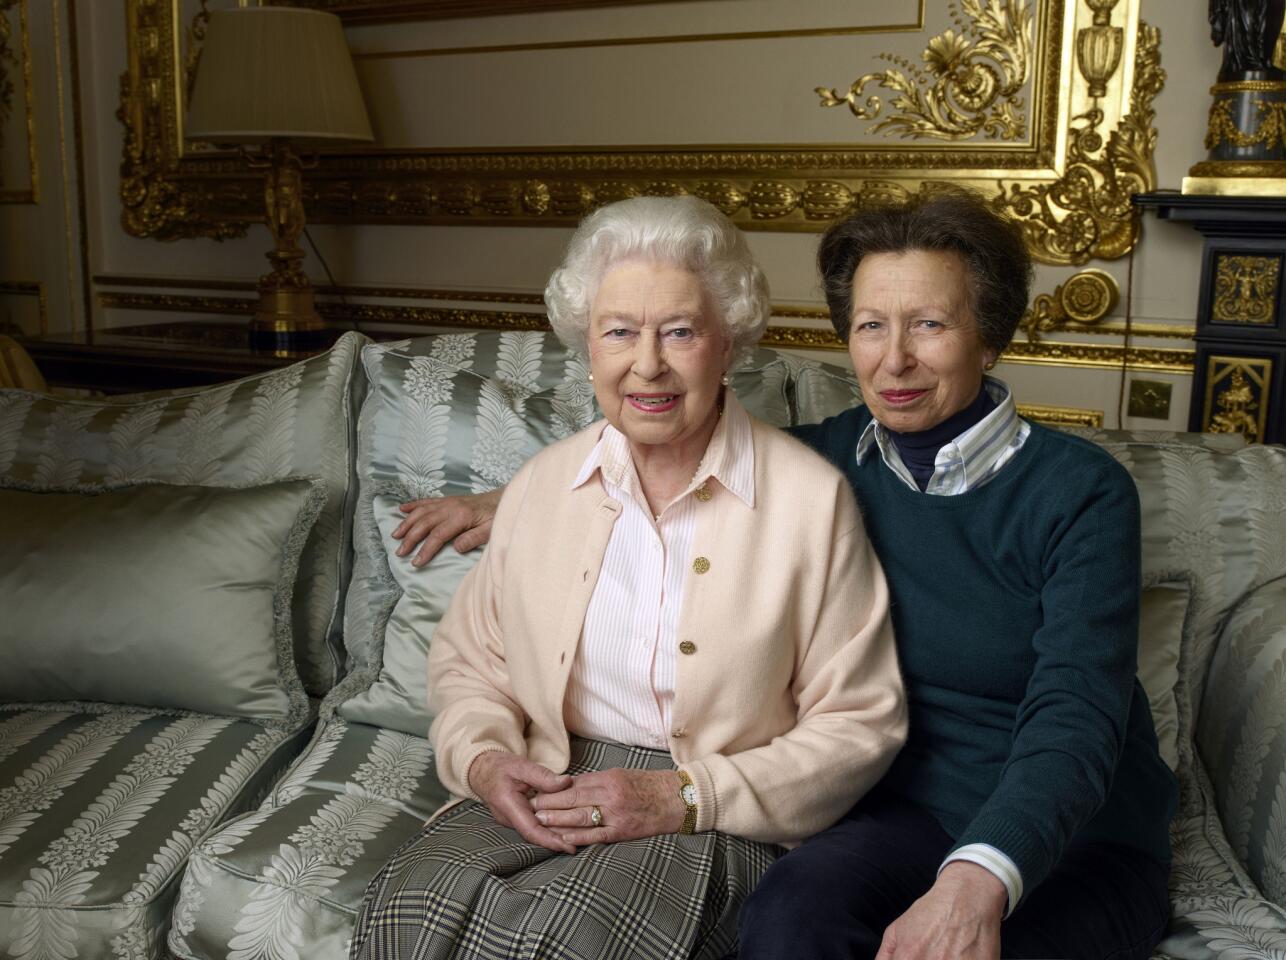 The queen turns 90